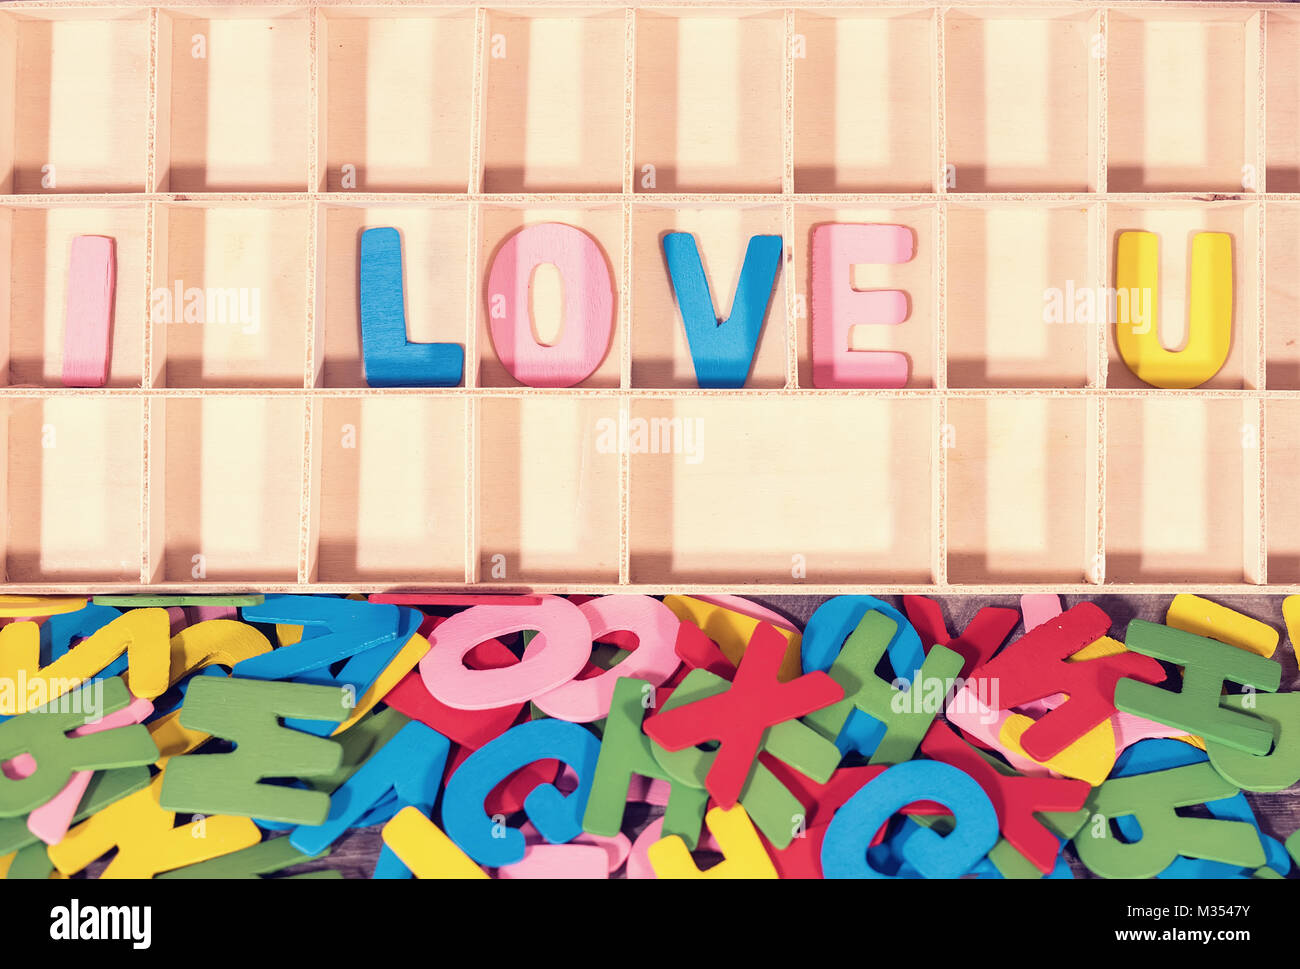 love spell with Wooden alphabet blocks Stock Photo